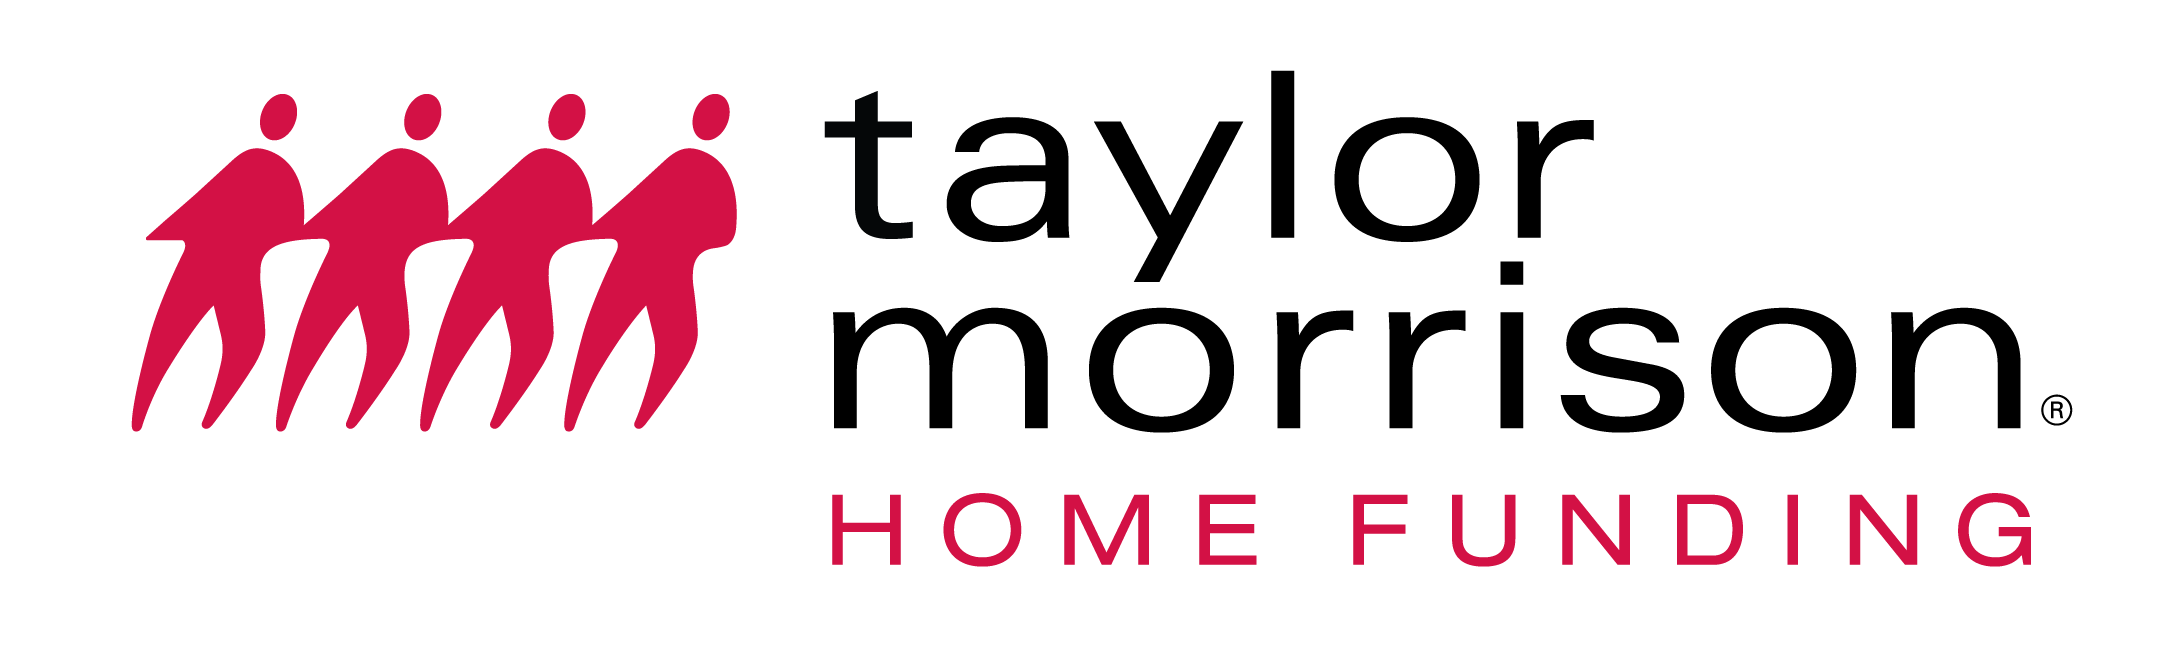 Taylor Morrison Home Funding logo